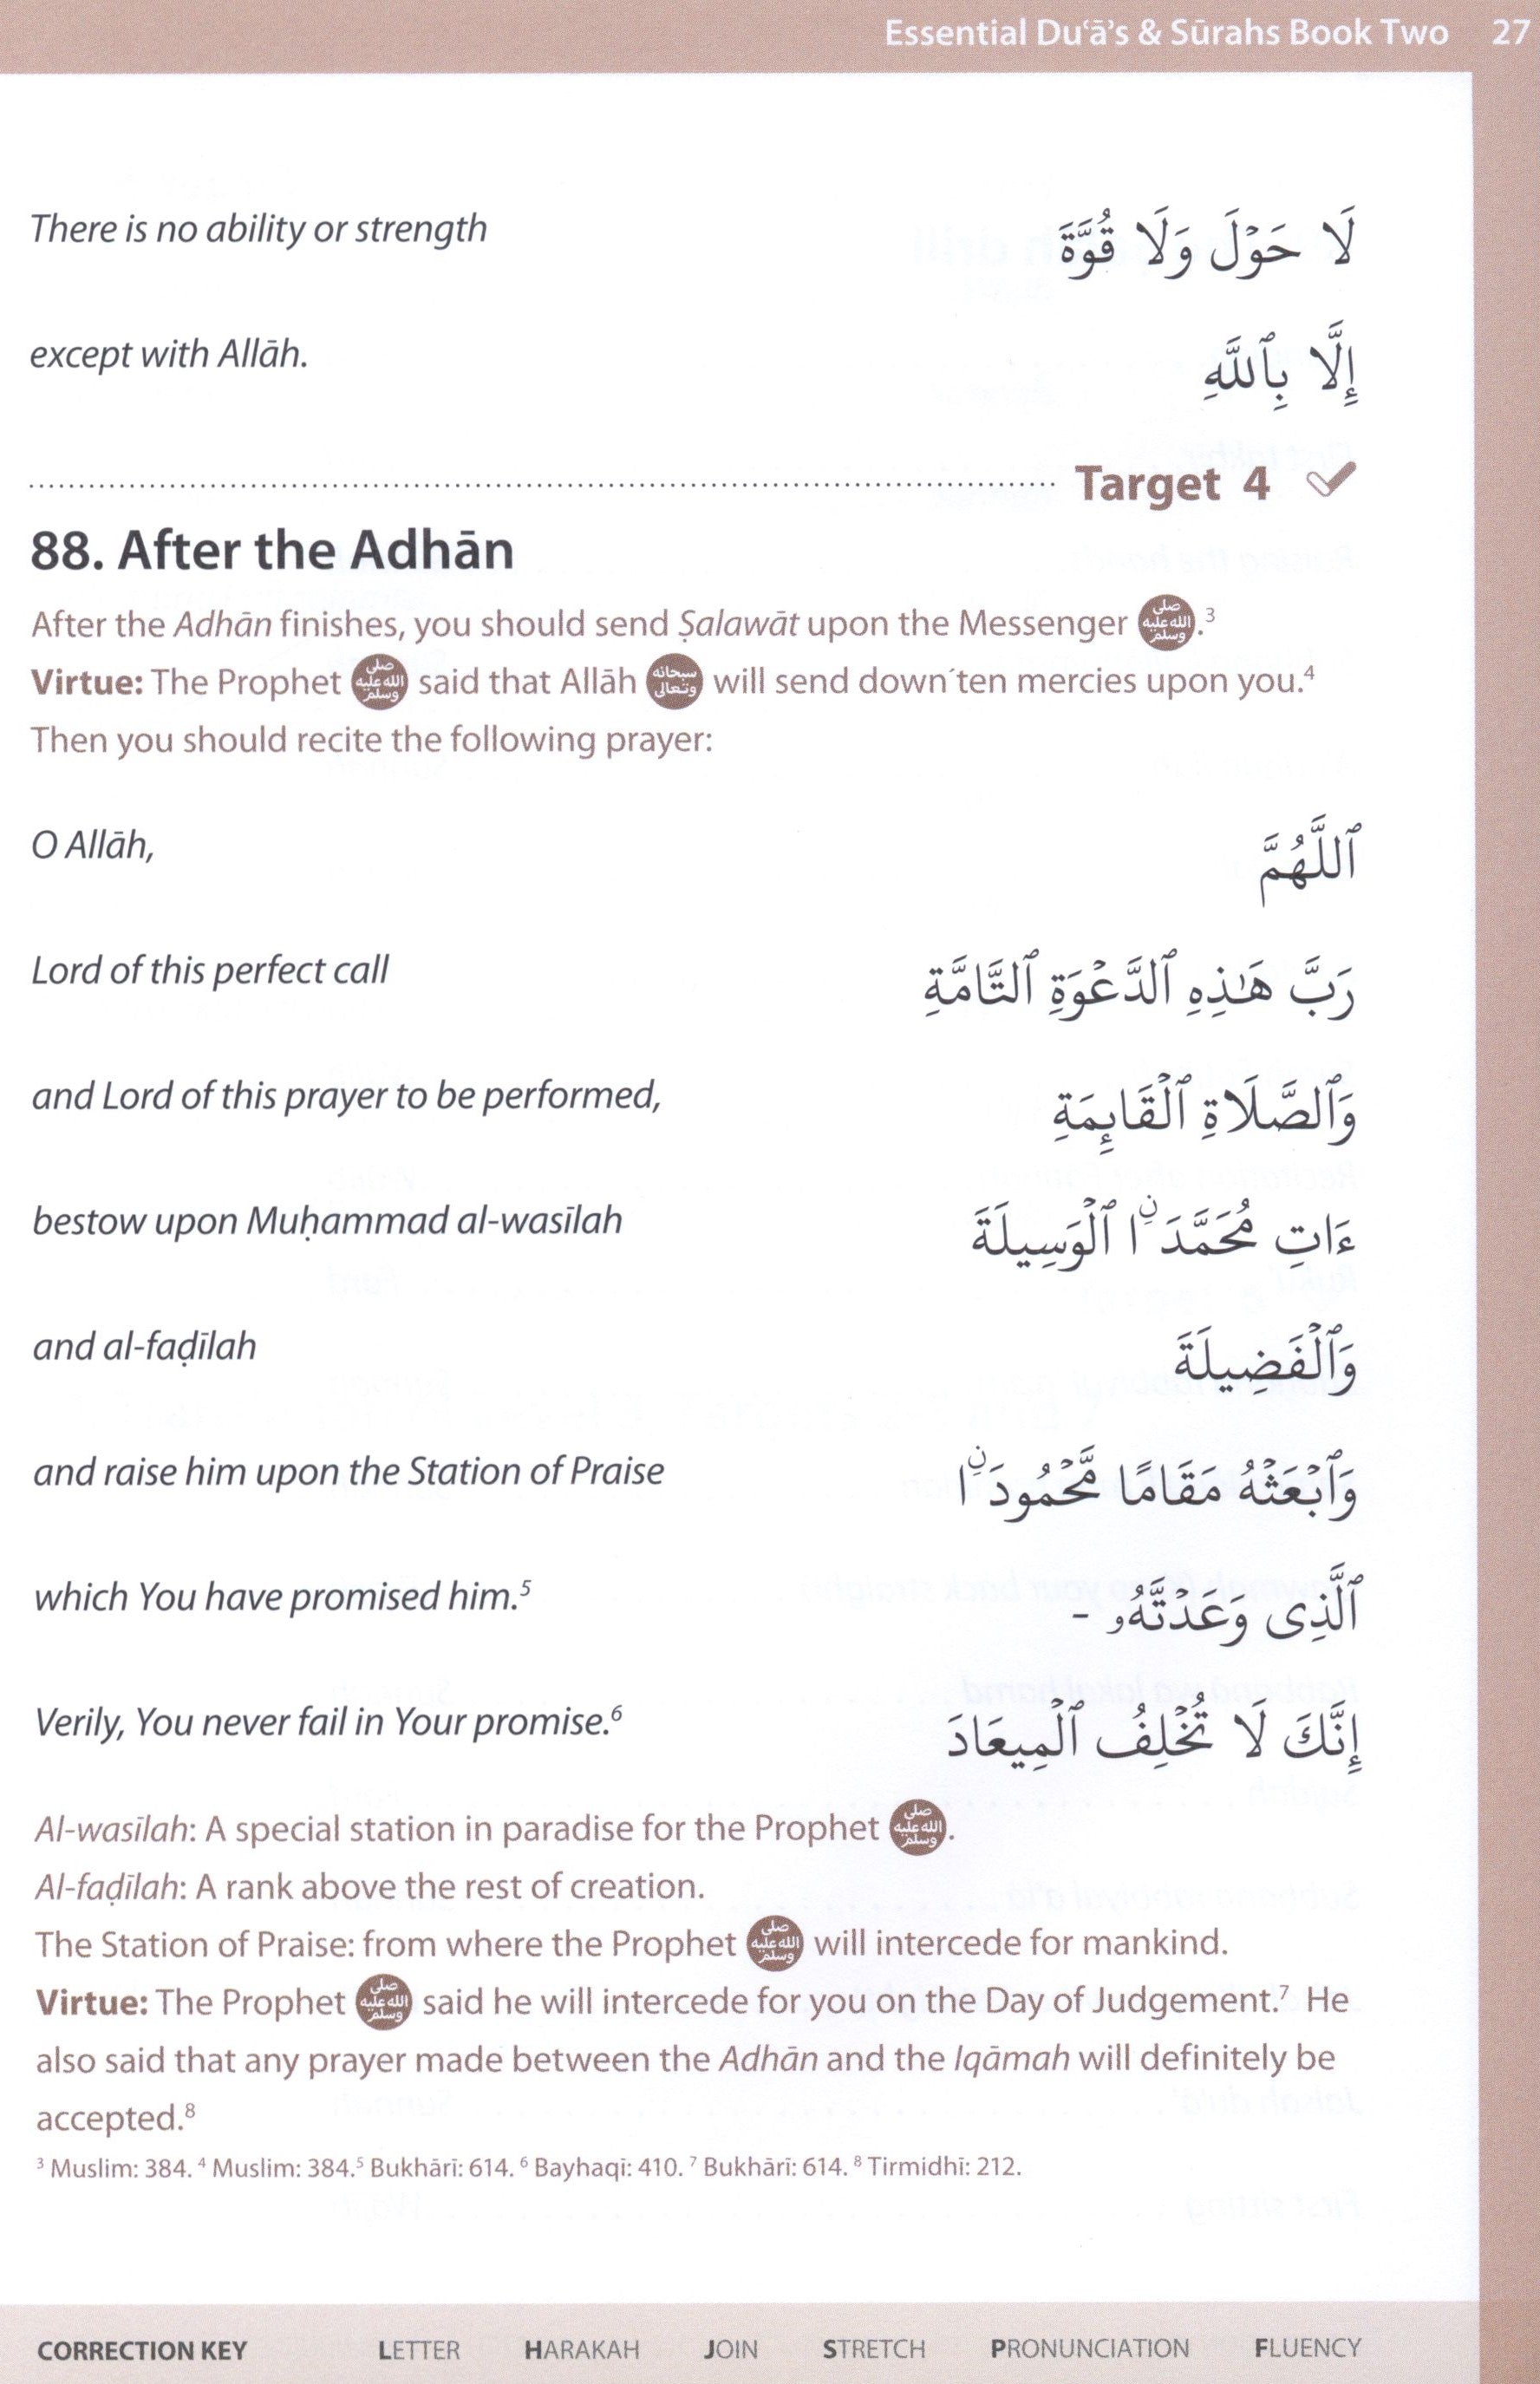 Essential Duas and Surahs Book 2 (Madinah Script)